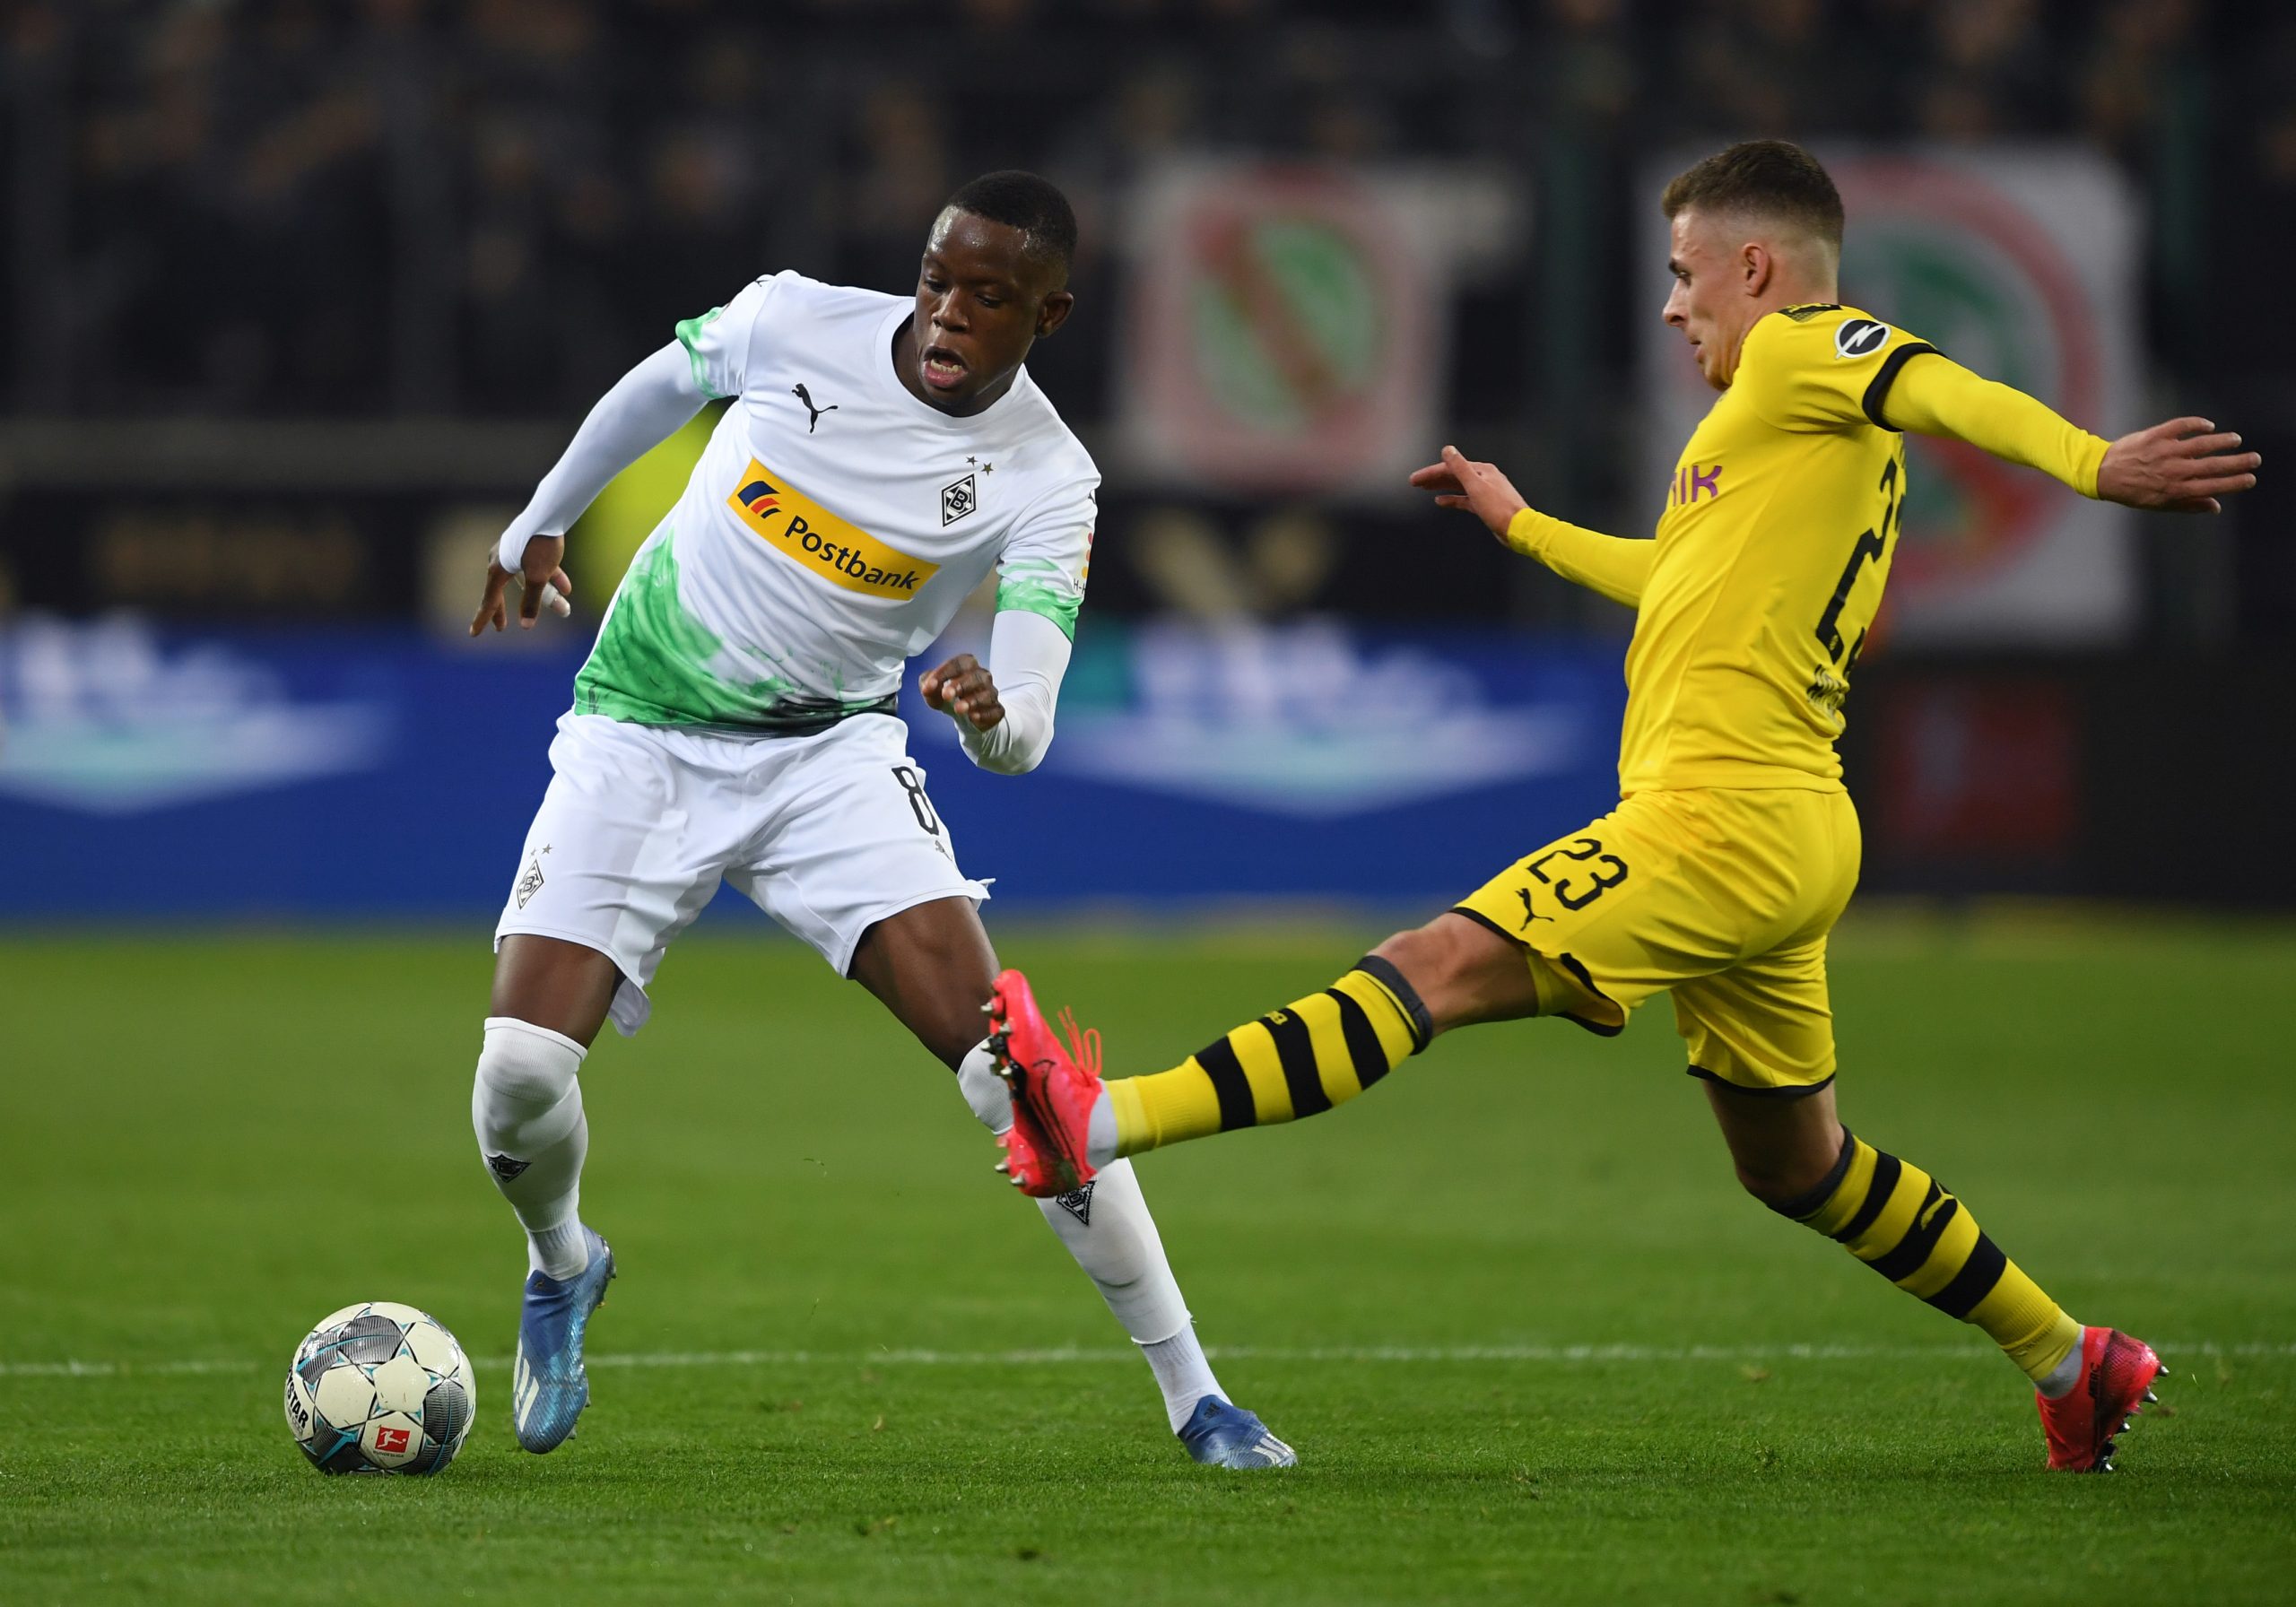 Borussia Moenchengladbach v Borussia Dortmund - Bundesliga